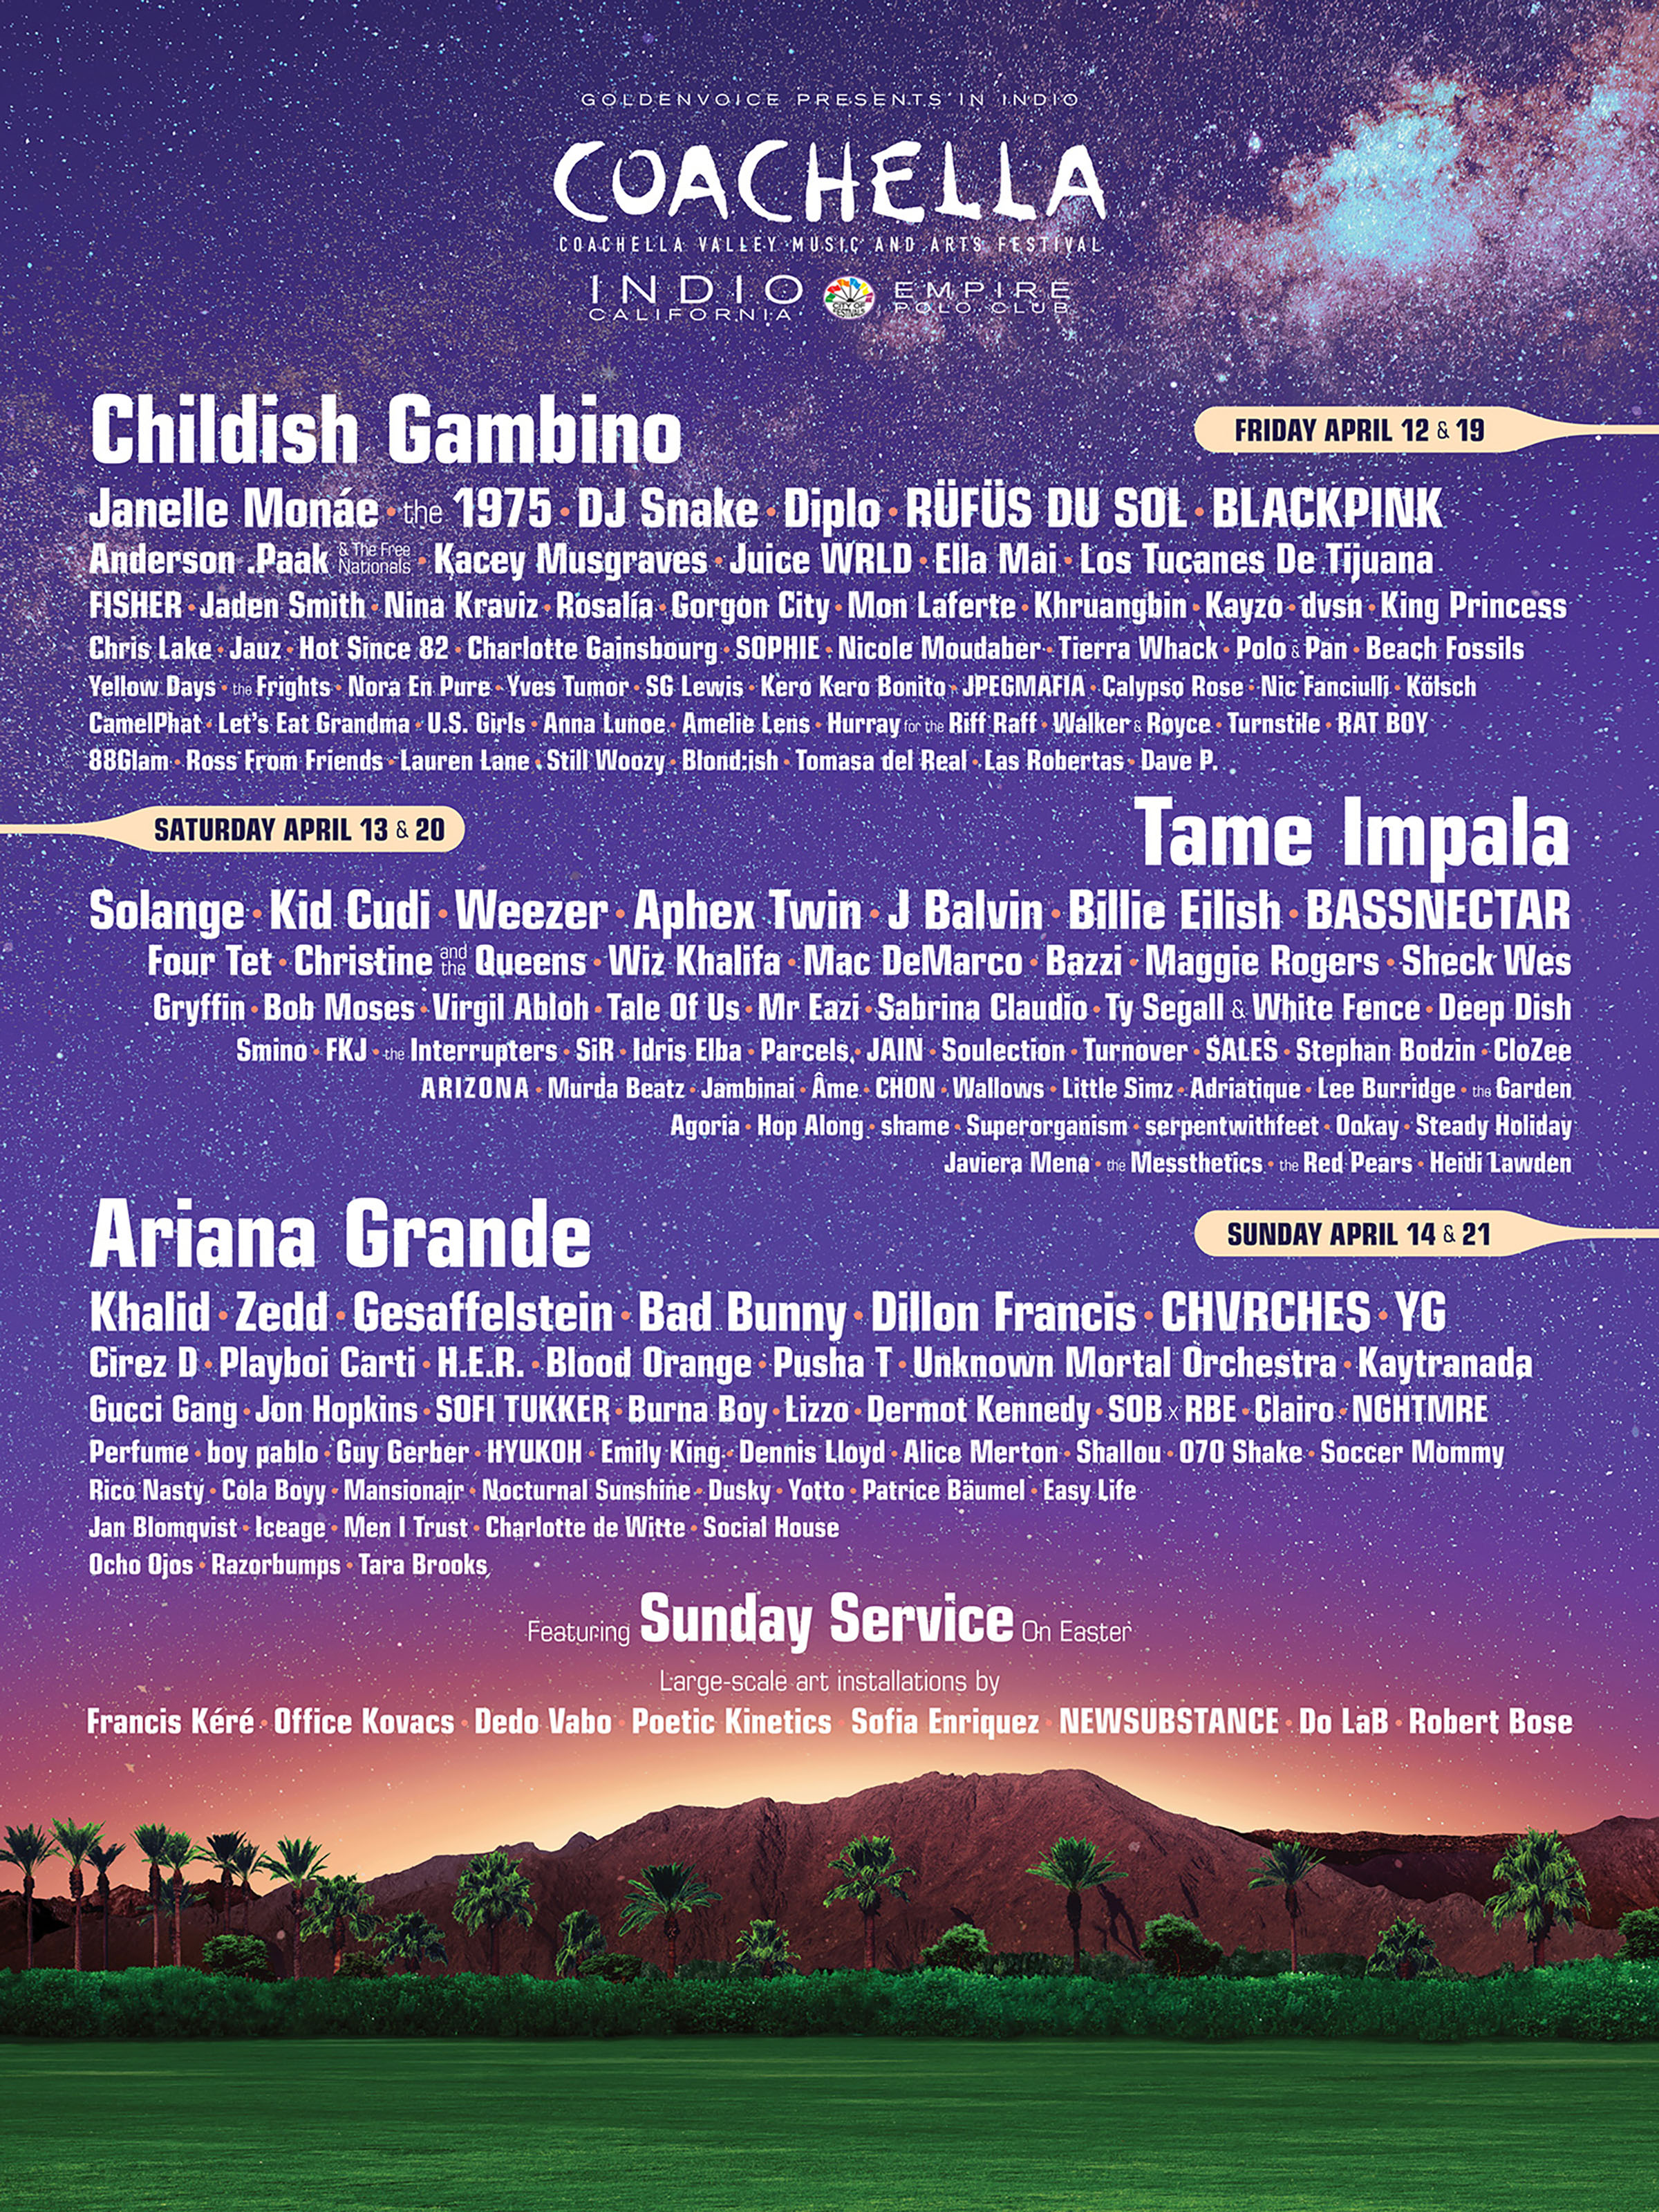 Coachella 2019 Lineup Poster